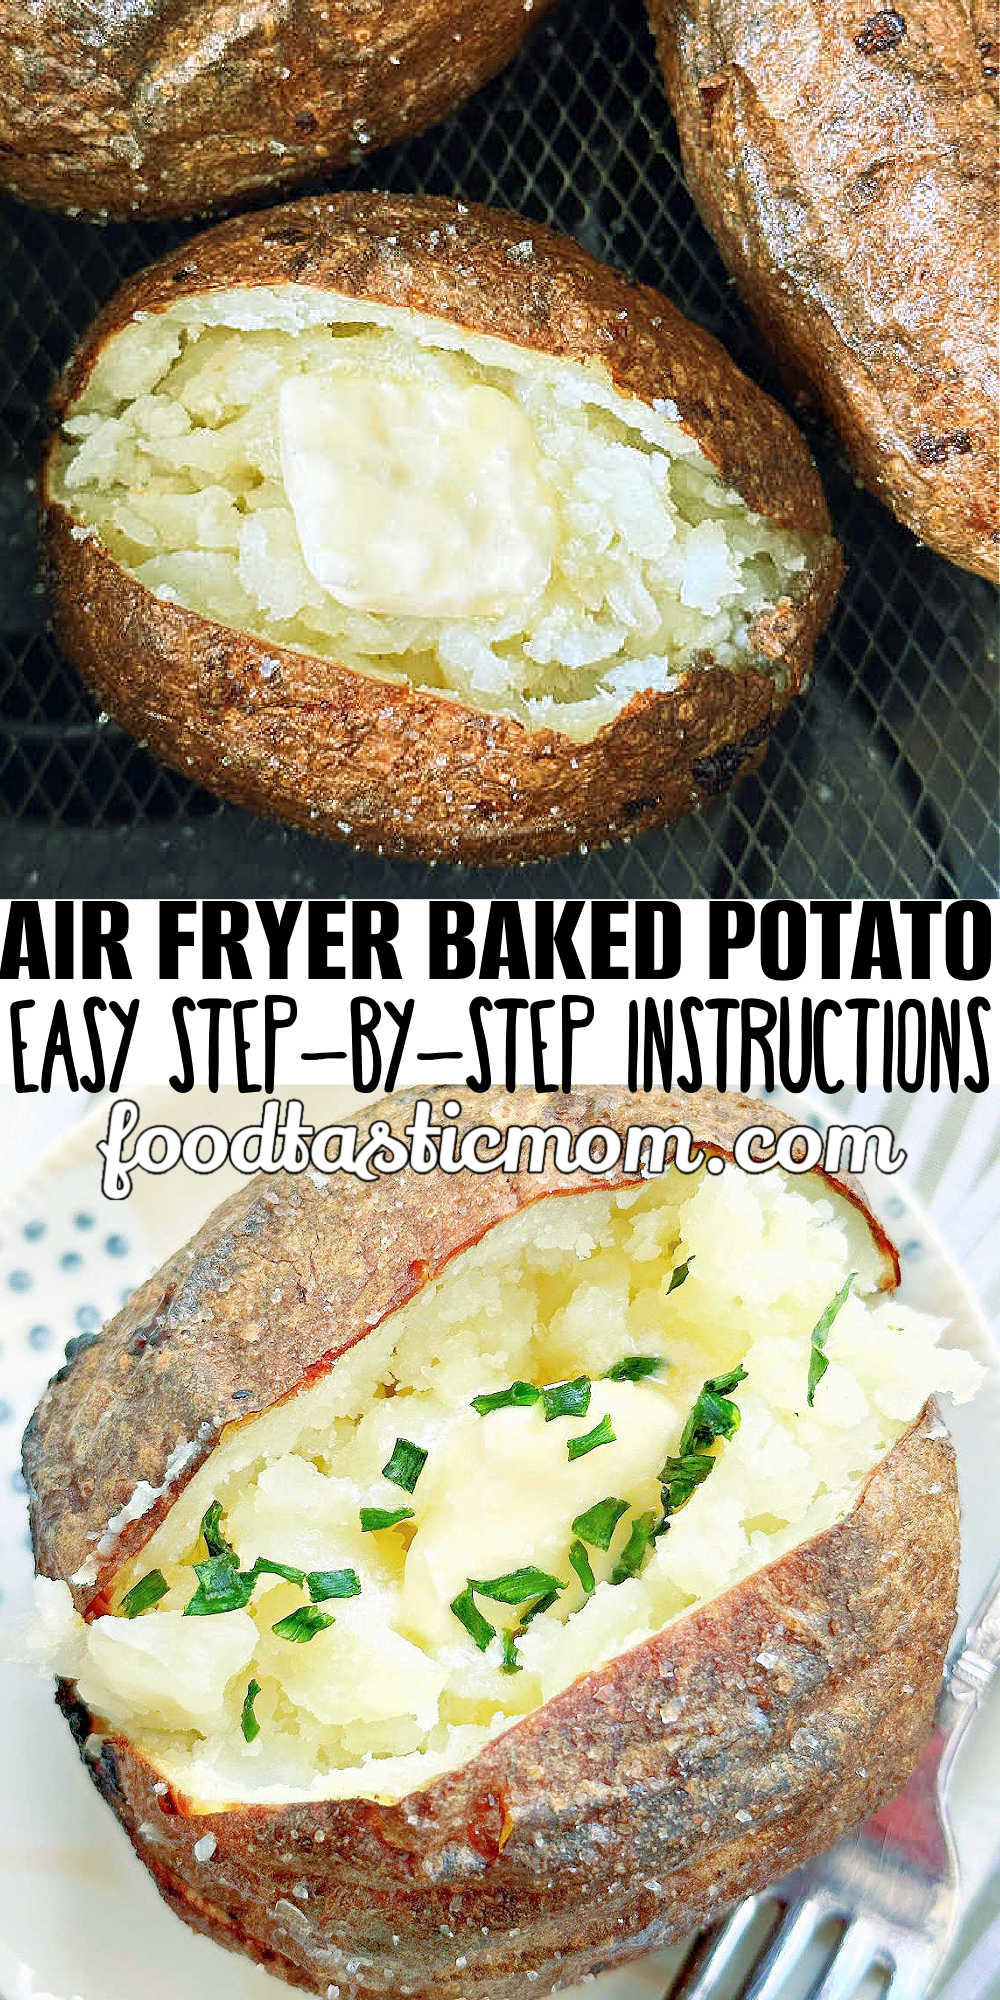 Air Fryer Baked Potato | Foodtastic Mom #airfryerbakedpotato #airfryerrecipes #potatorecipes via @foodtasticmom